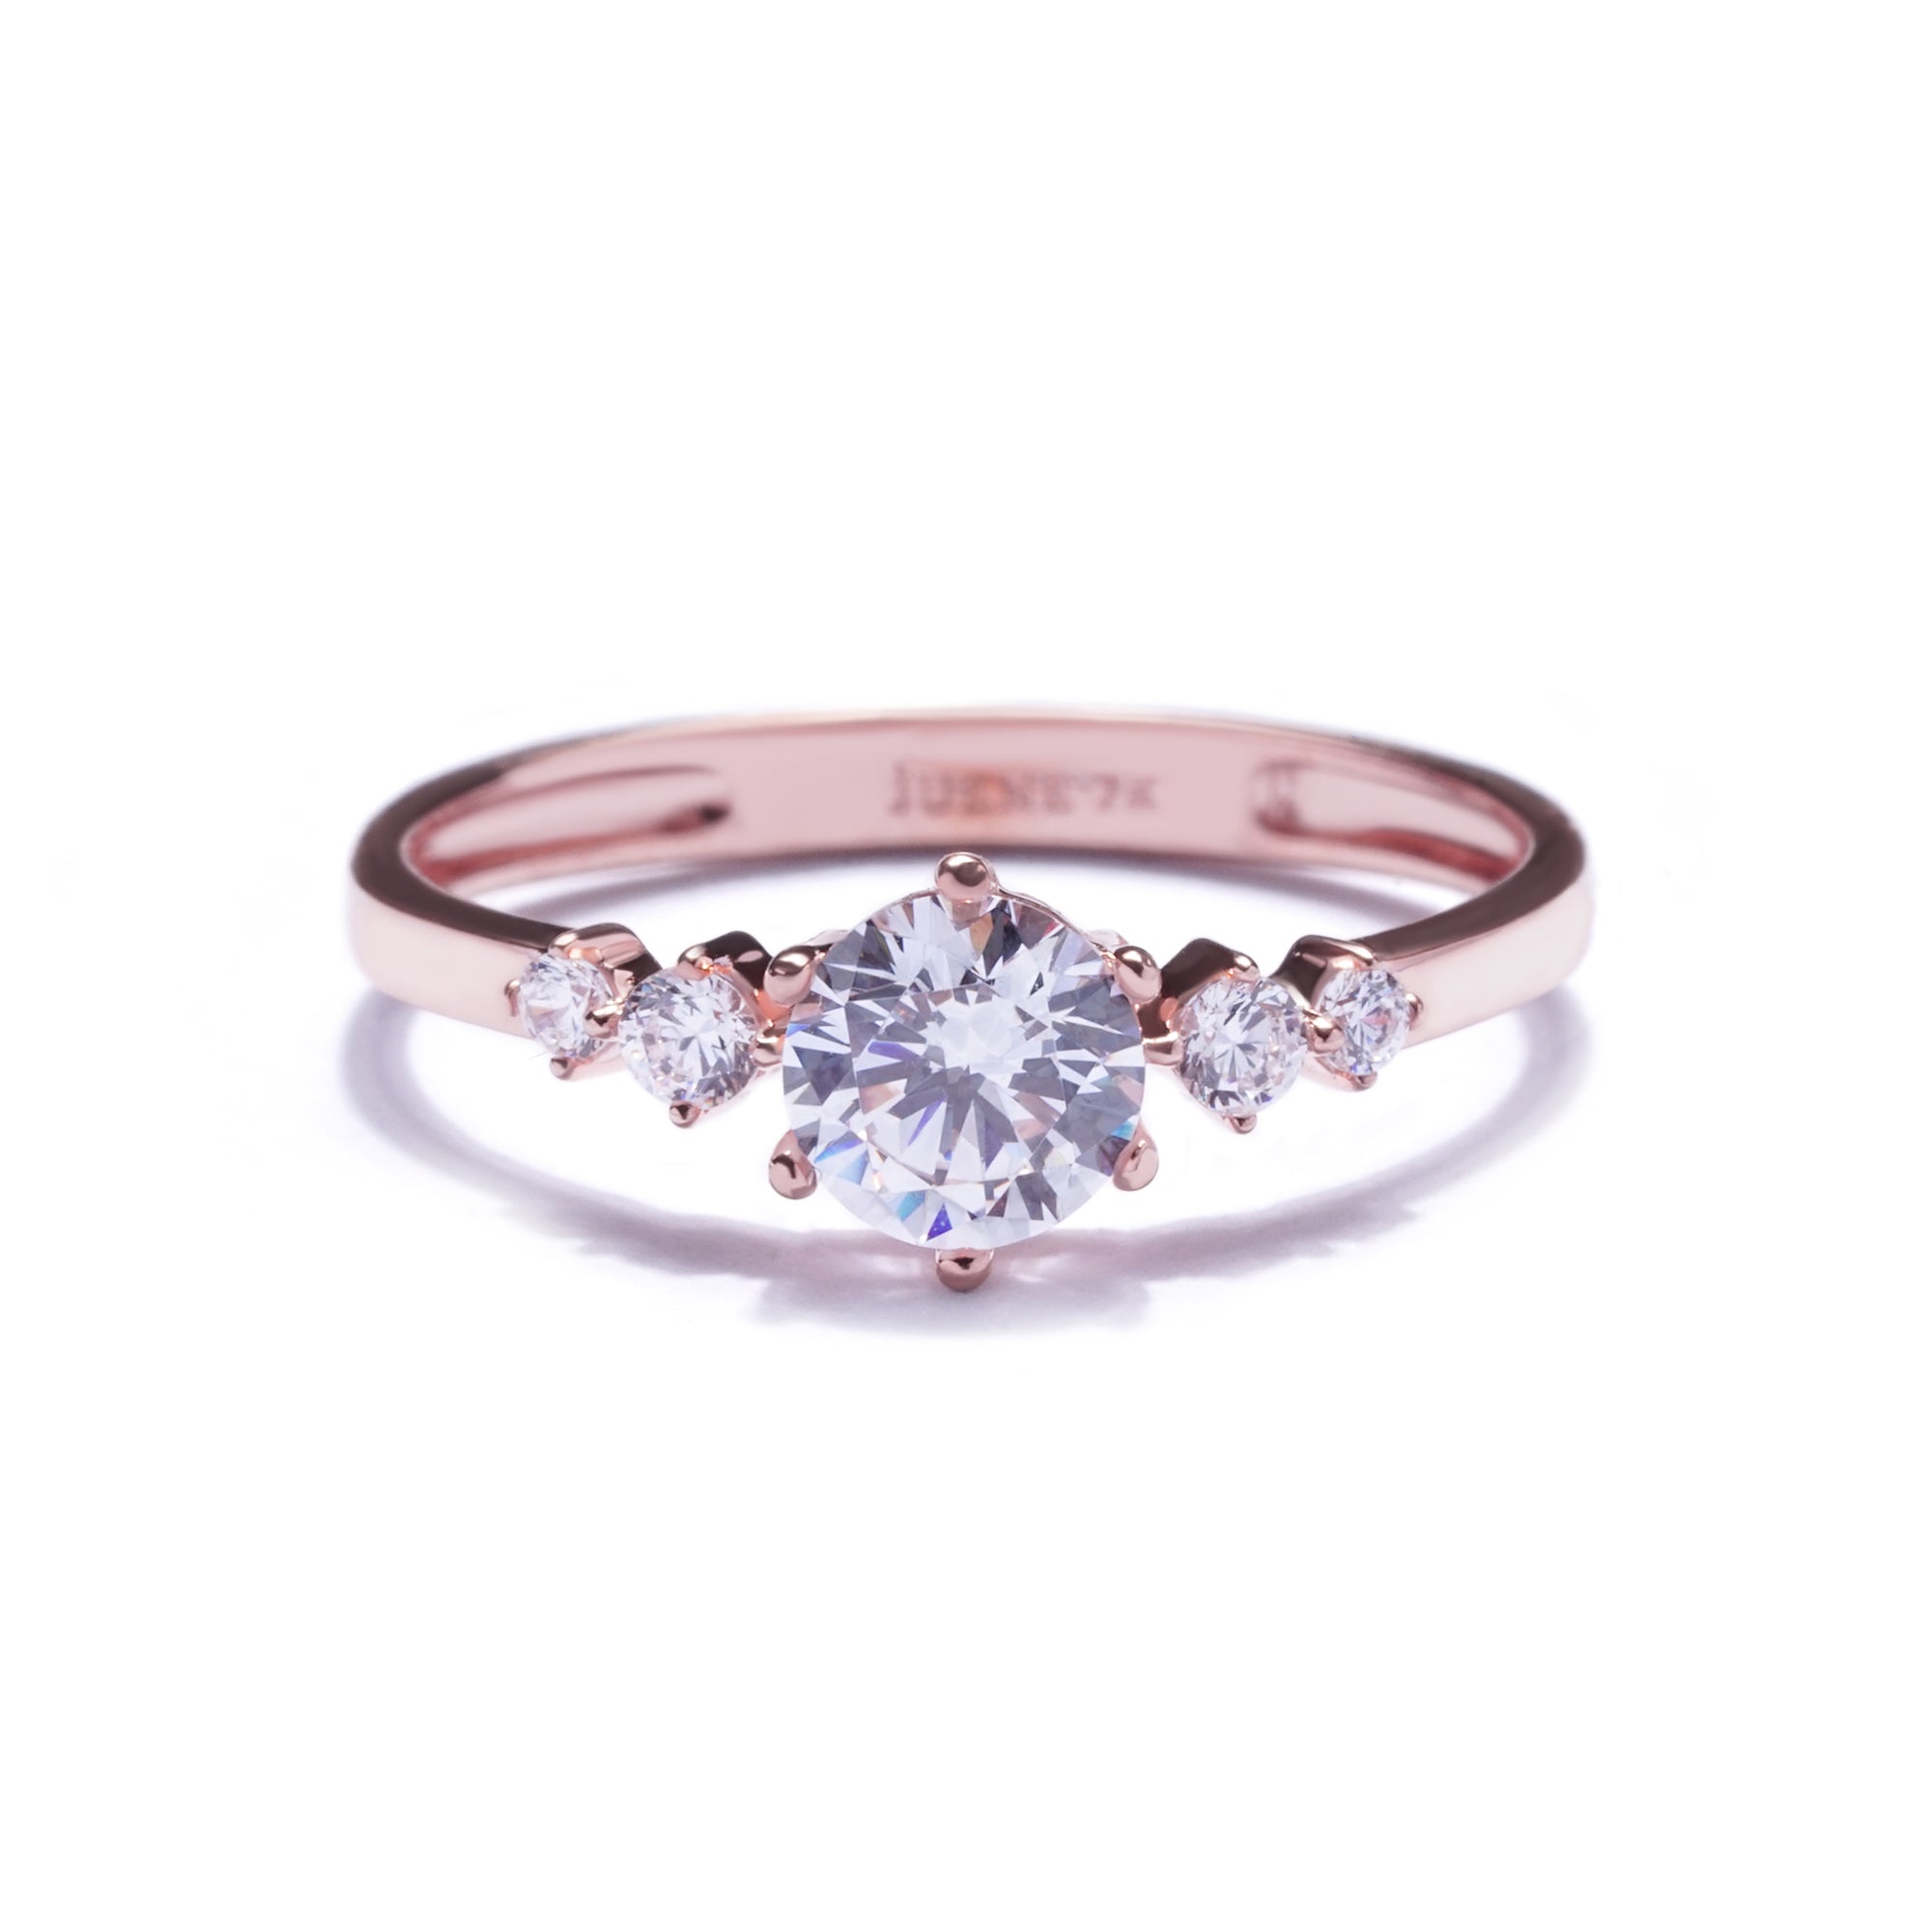 Lulu Gold Ring - Dazzling Juene Collection - Juene Jewelry